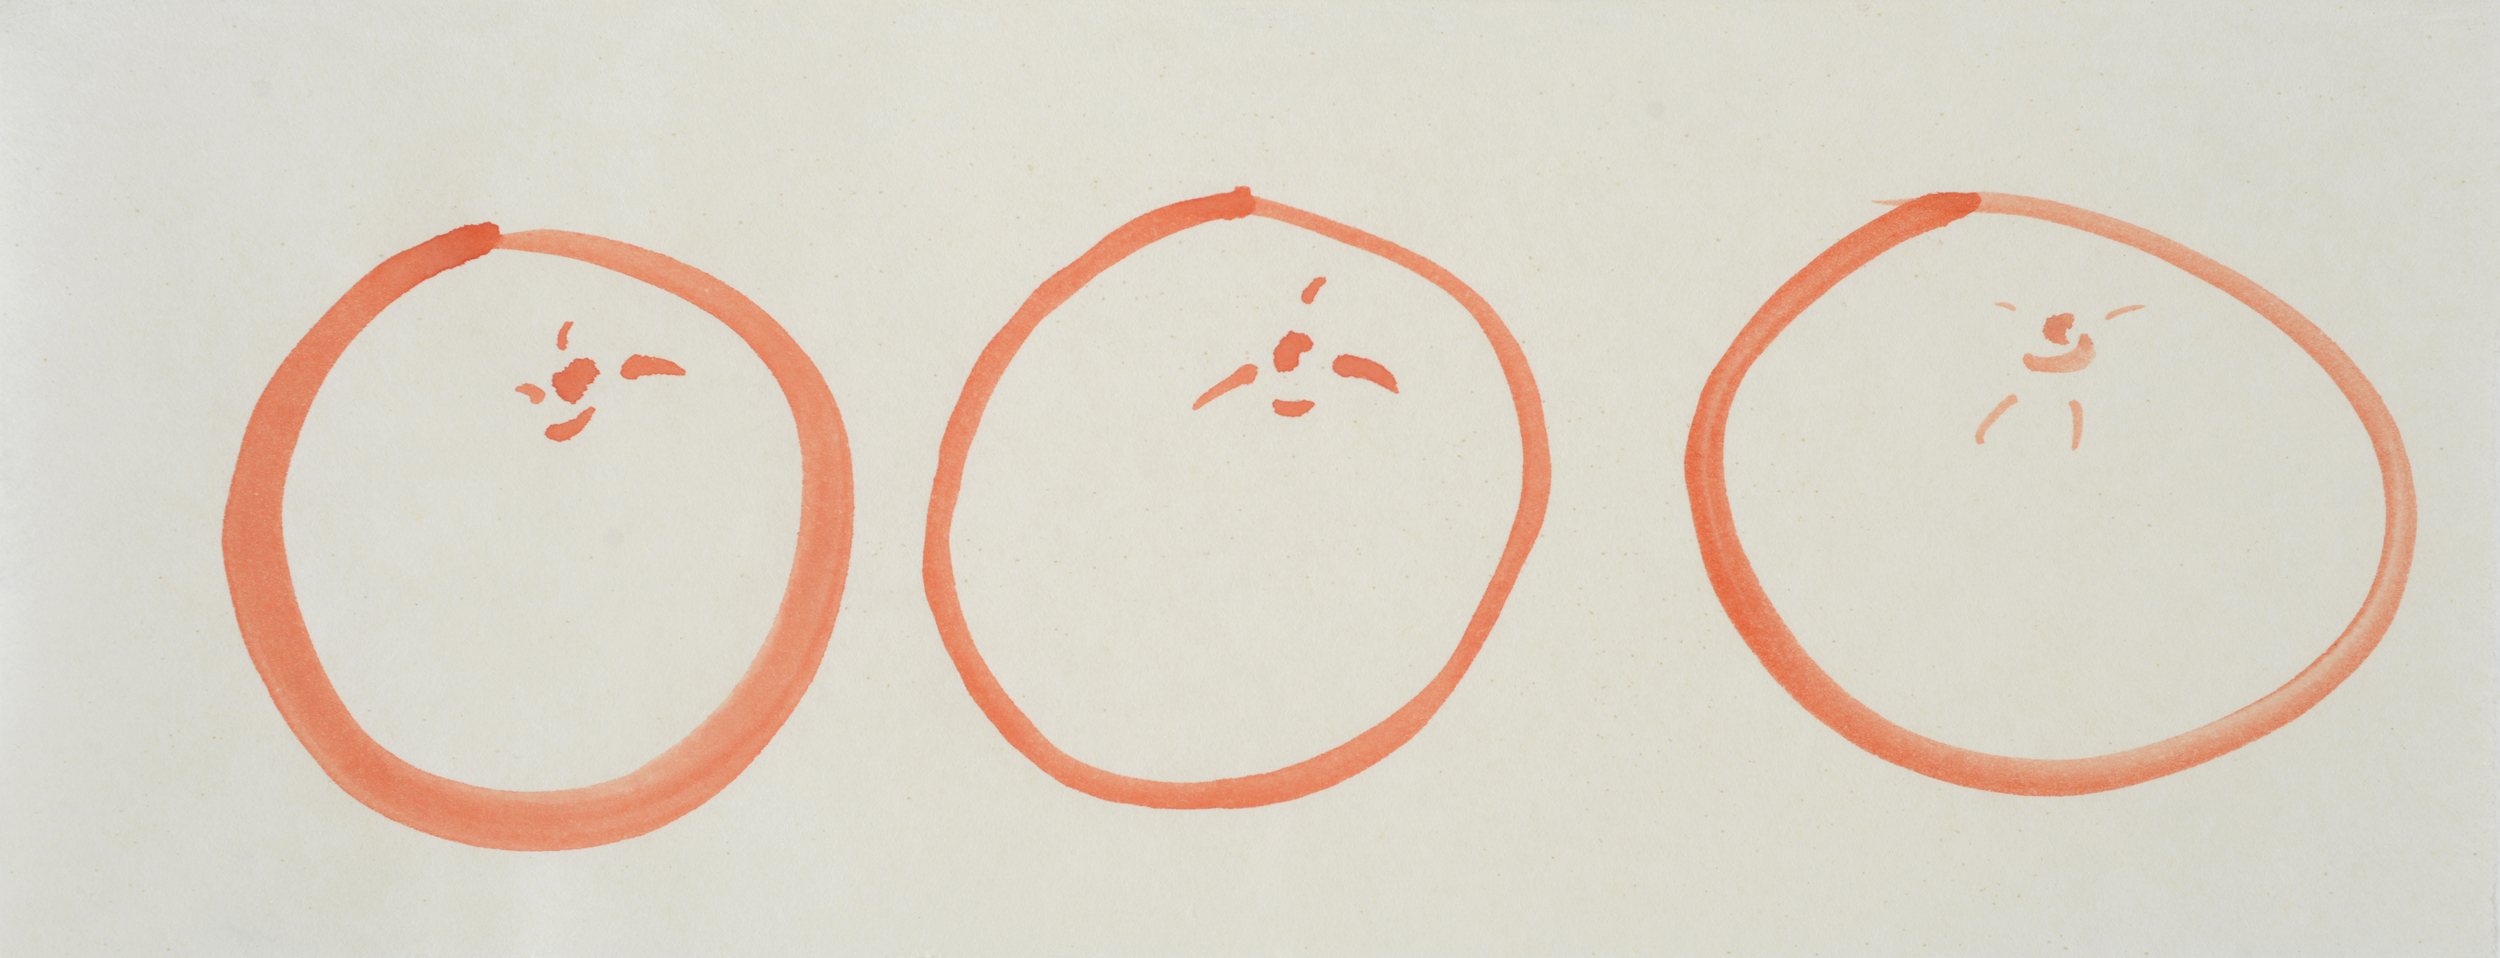 ensō | grapefruit (01), 2015 | watercolor on Okawara paper | 5.5" x 14" | Private Collection, Harlem, NY